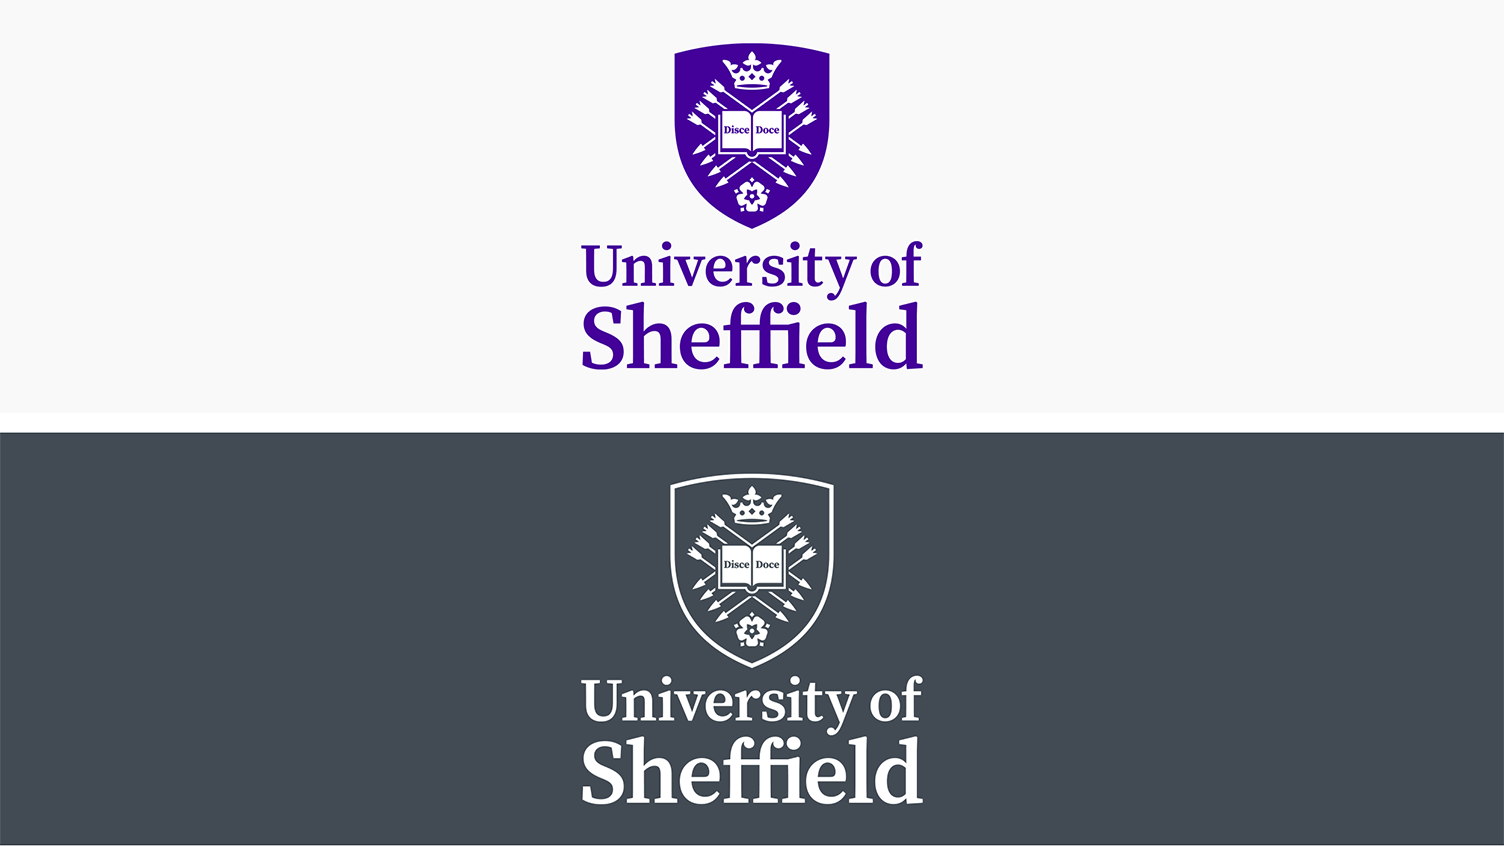 The University's secondary logo